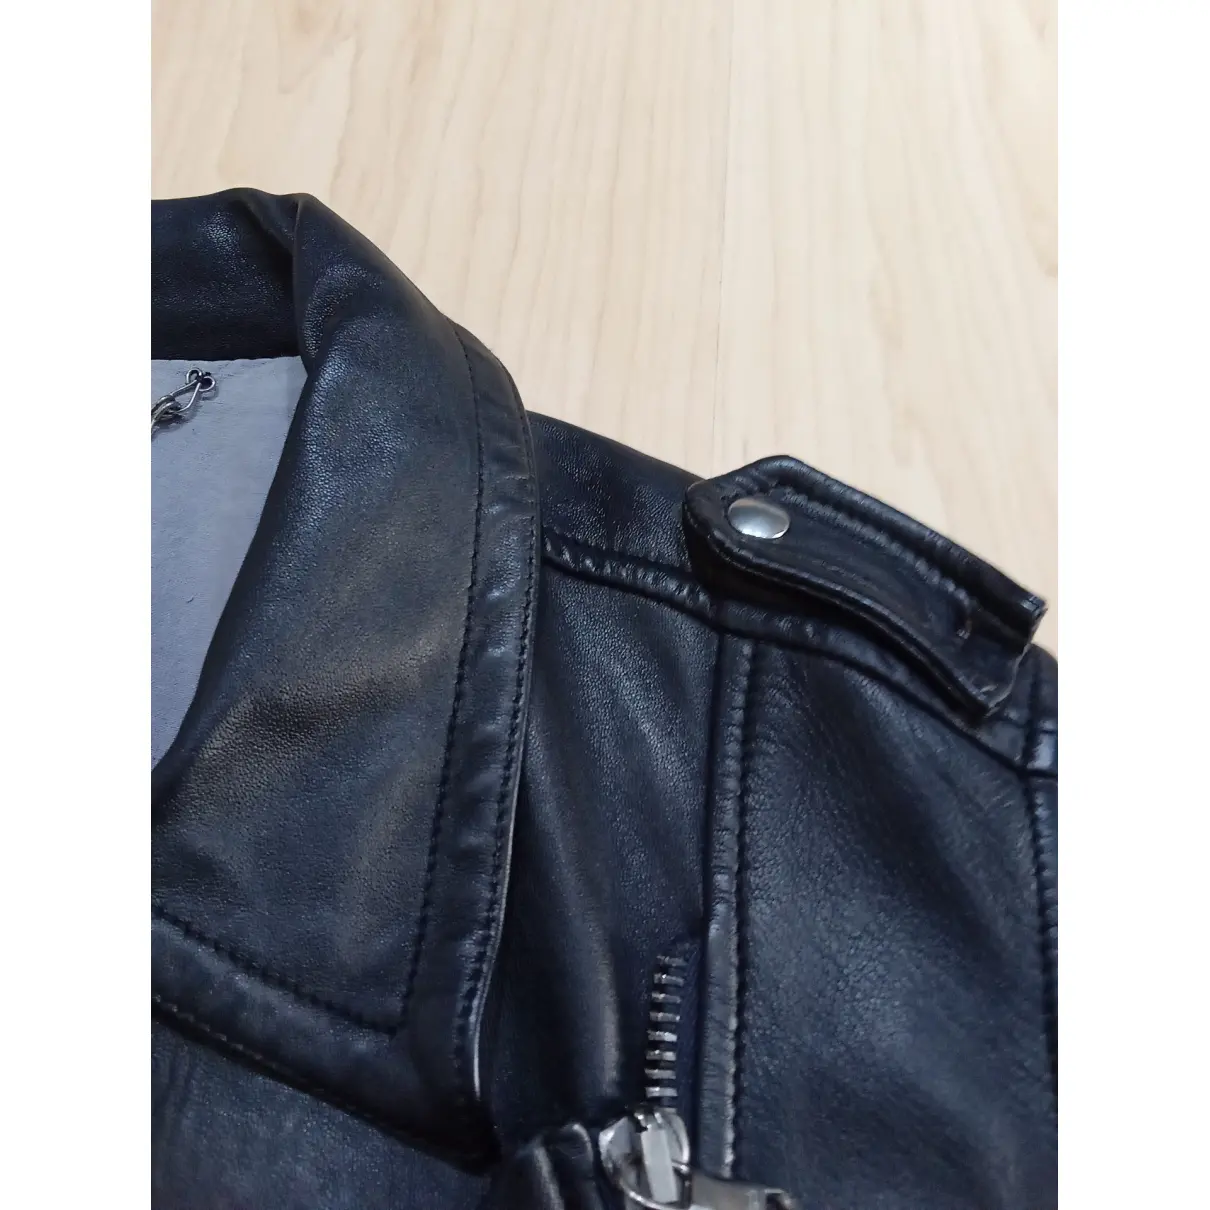 Buy Maison Mihara Yasuhiro Leather vest online - Vintage